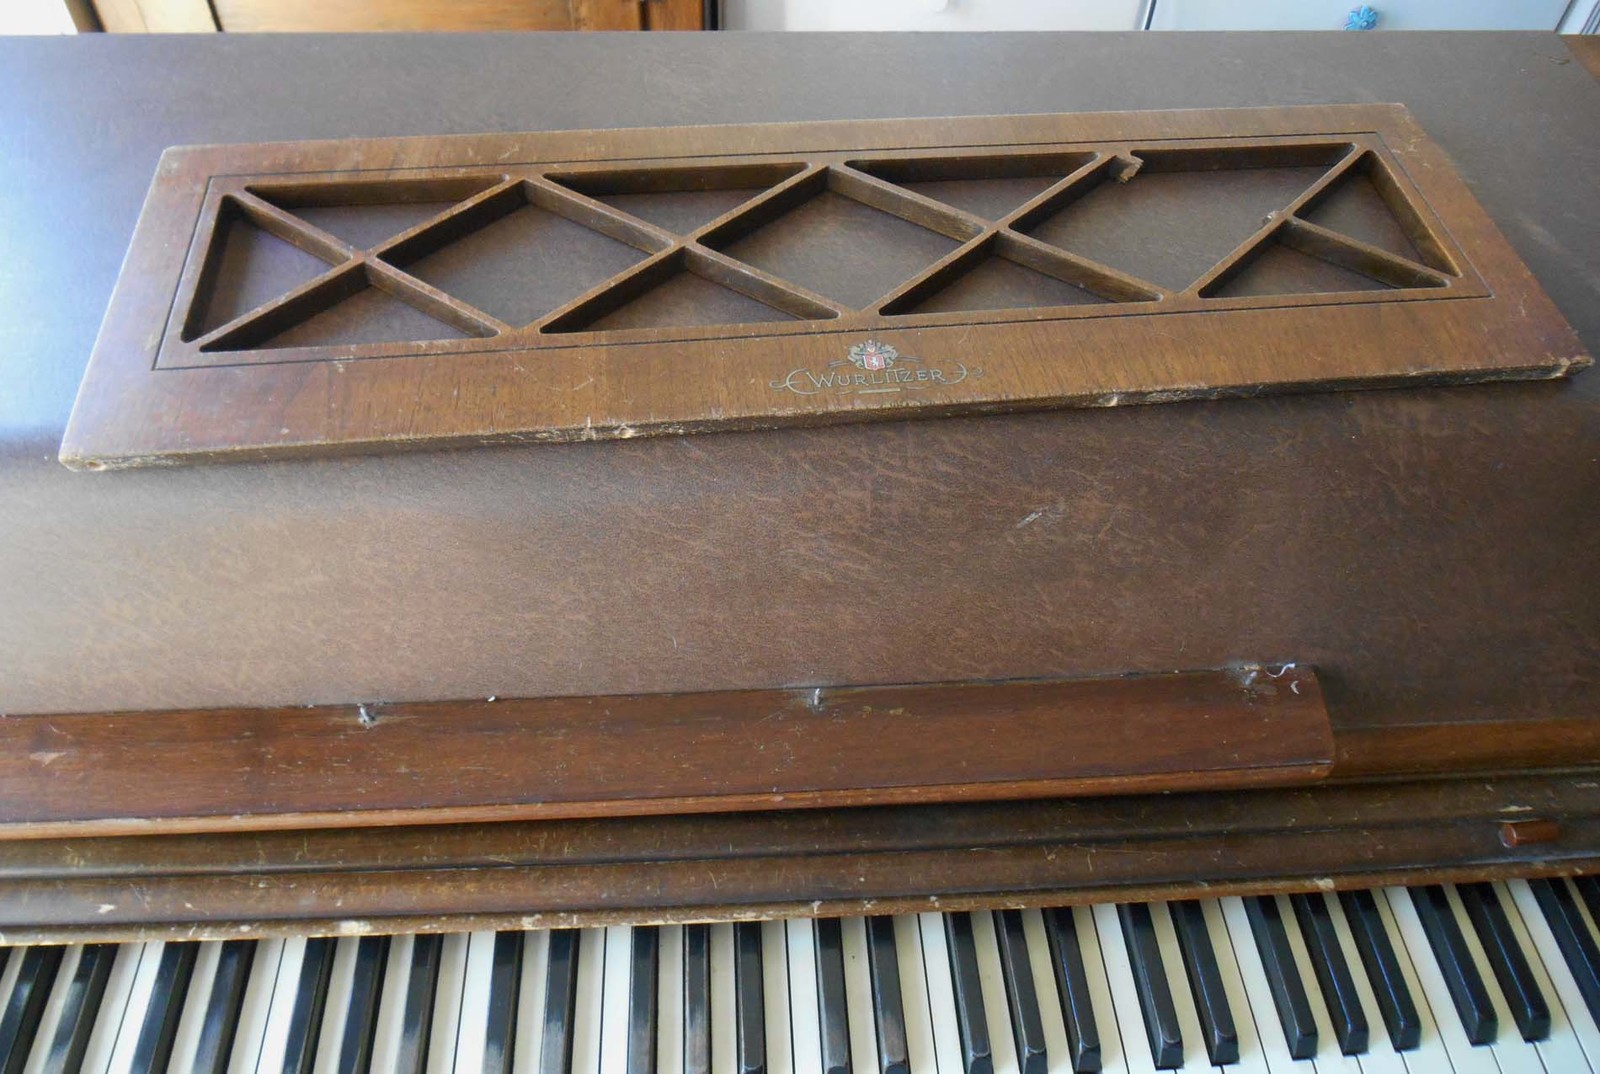 wurlitzer spinet piano 1940s